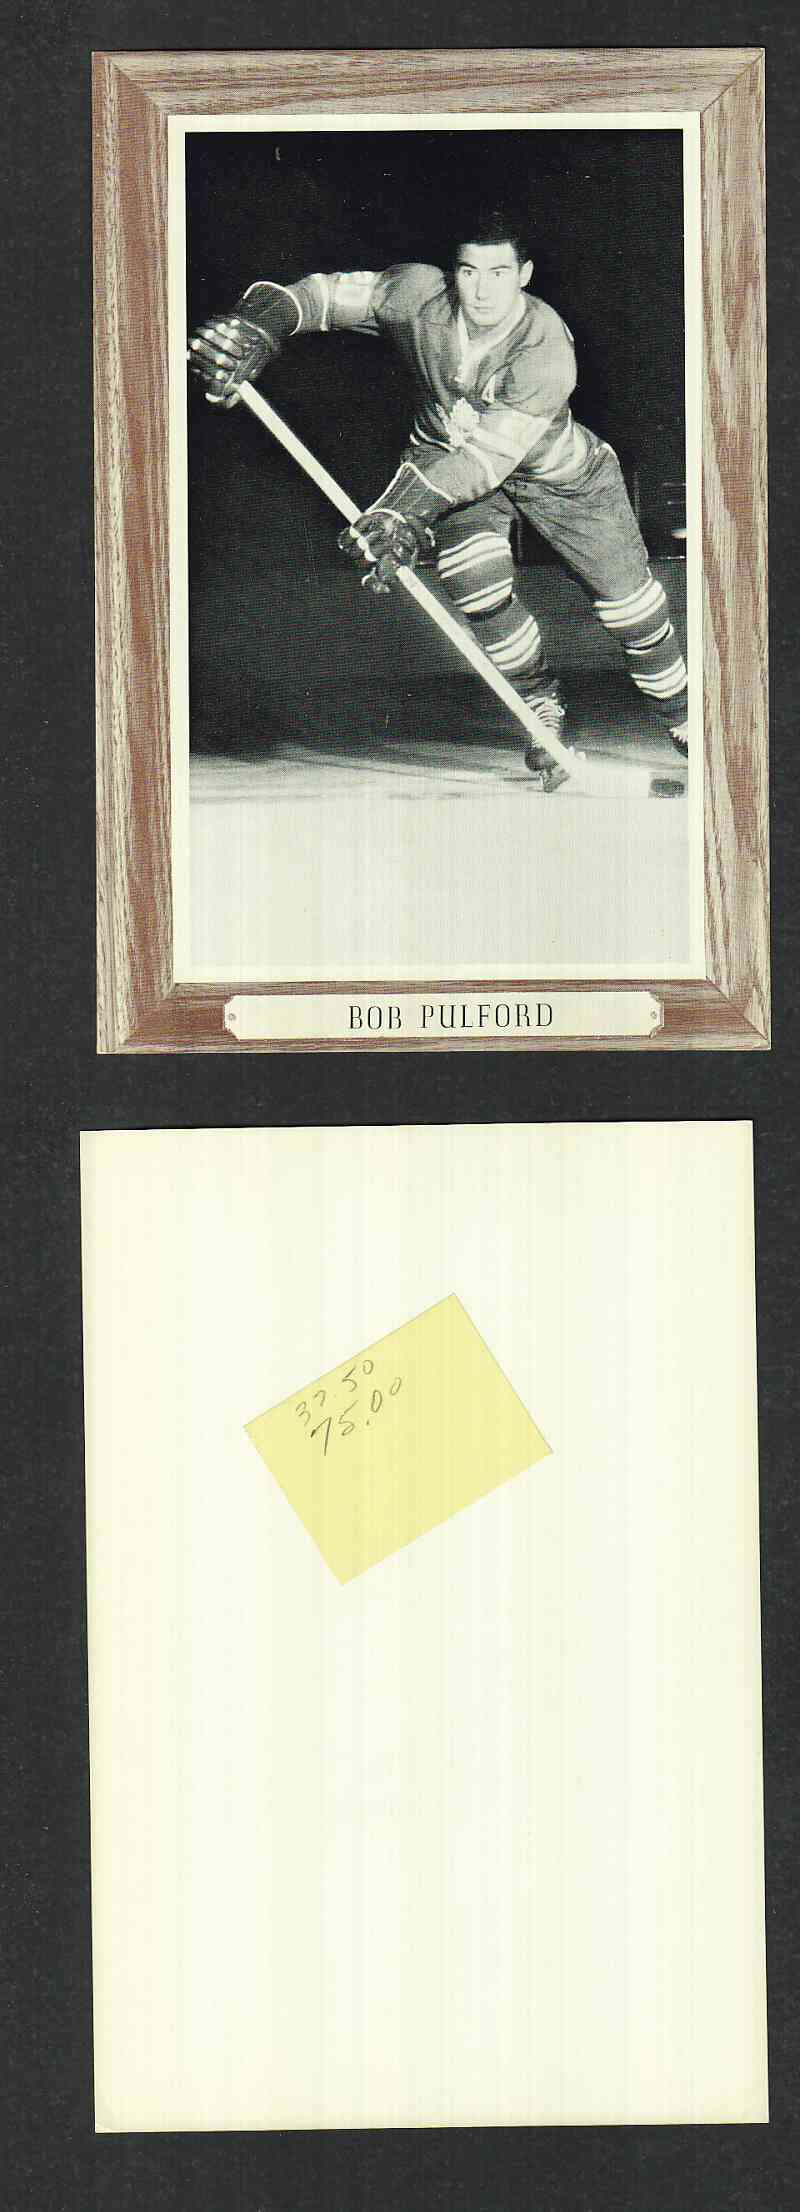 1964-67 BEEHIVE PHOTO GR.3 B. PULFORD *SP* photo